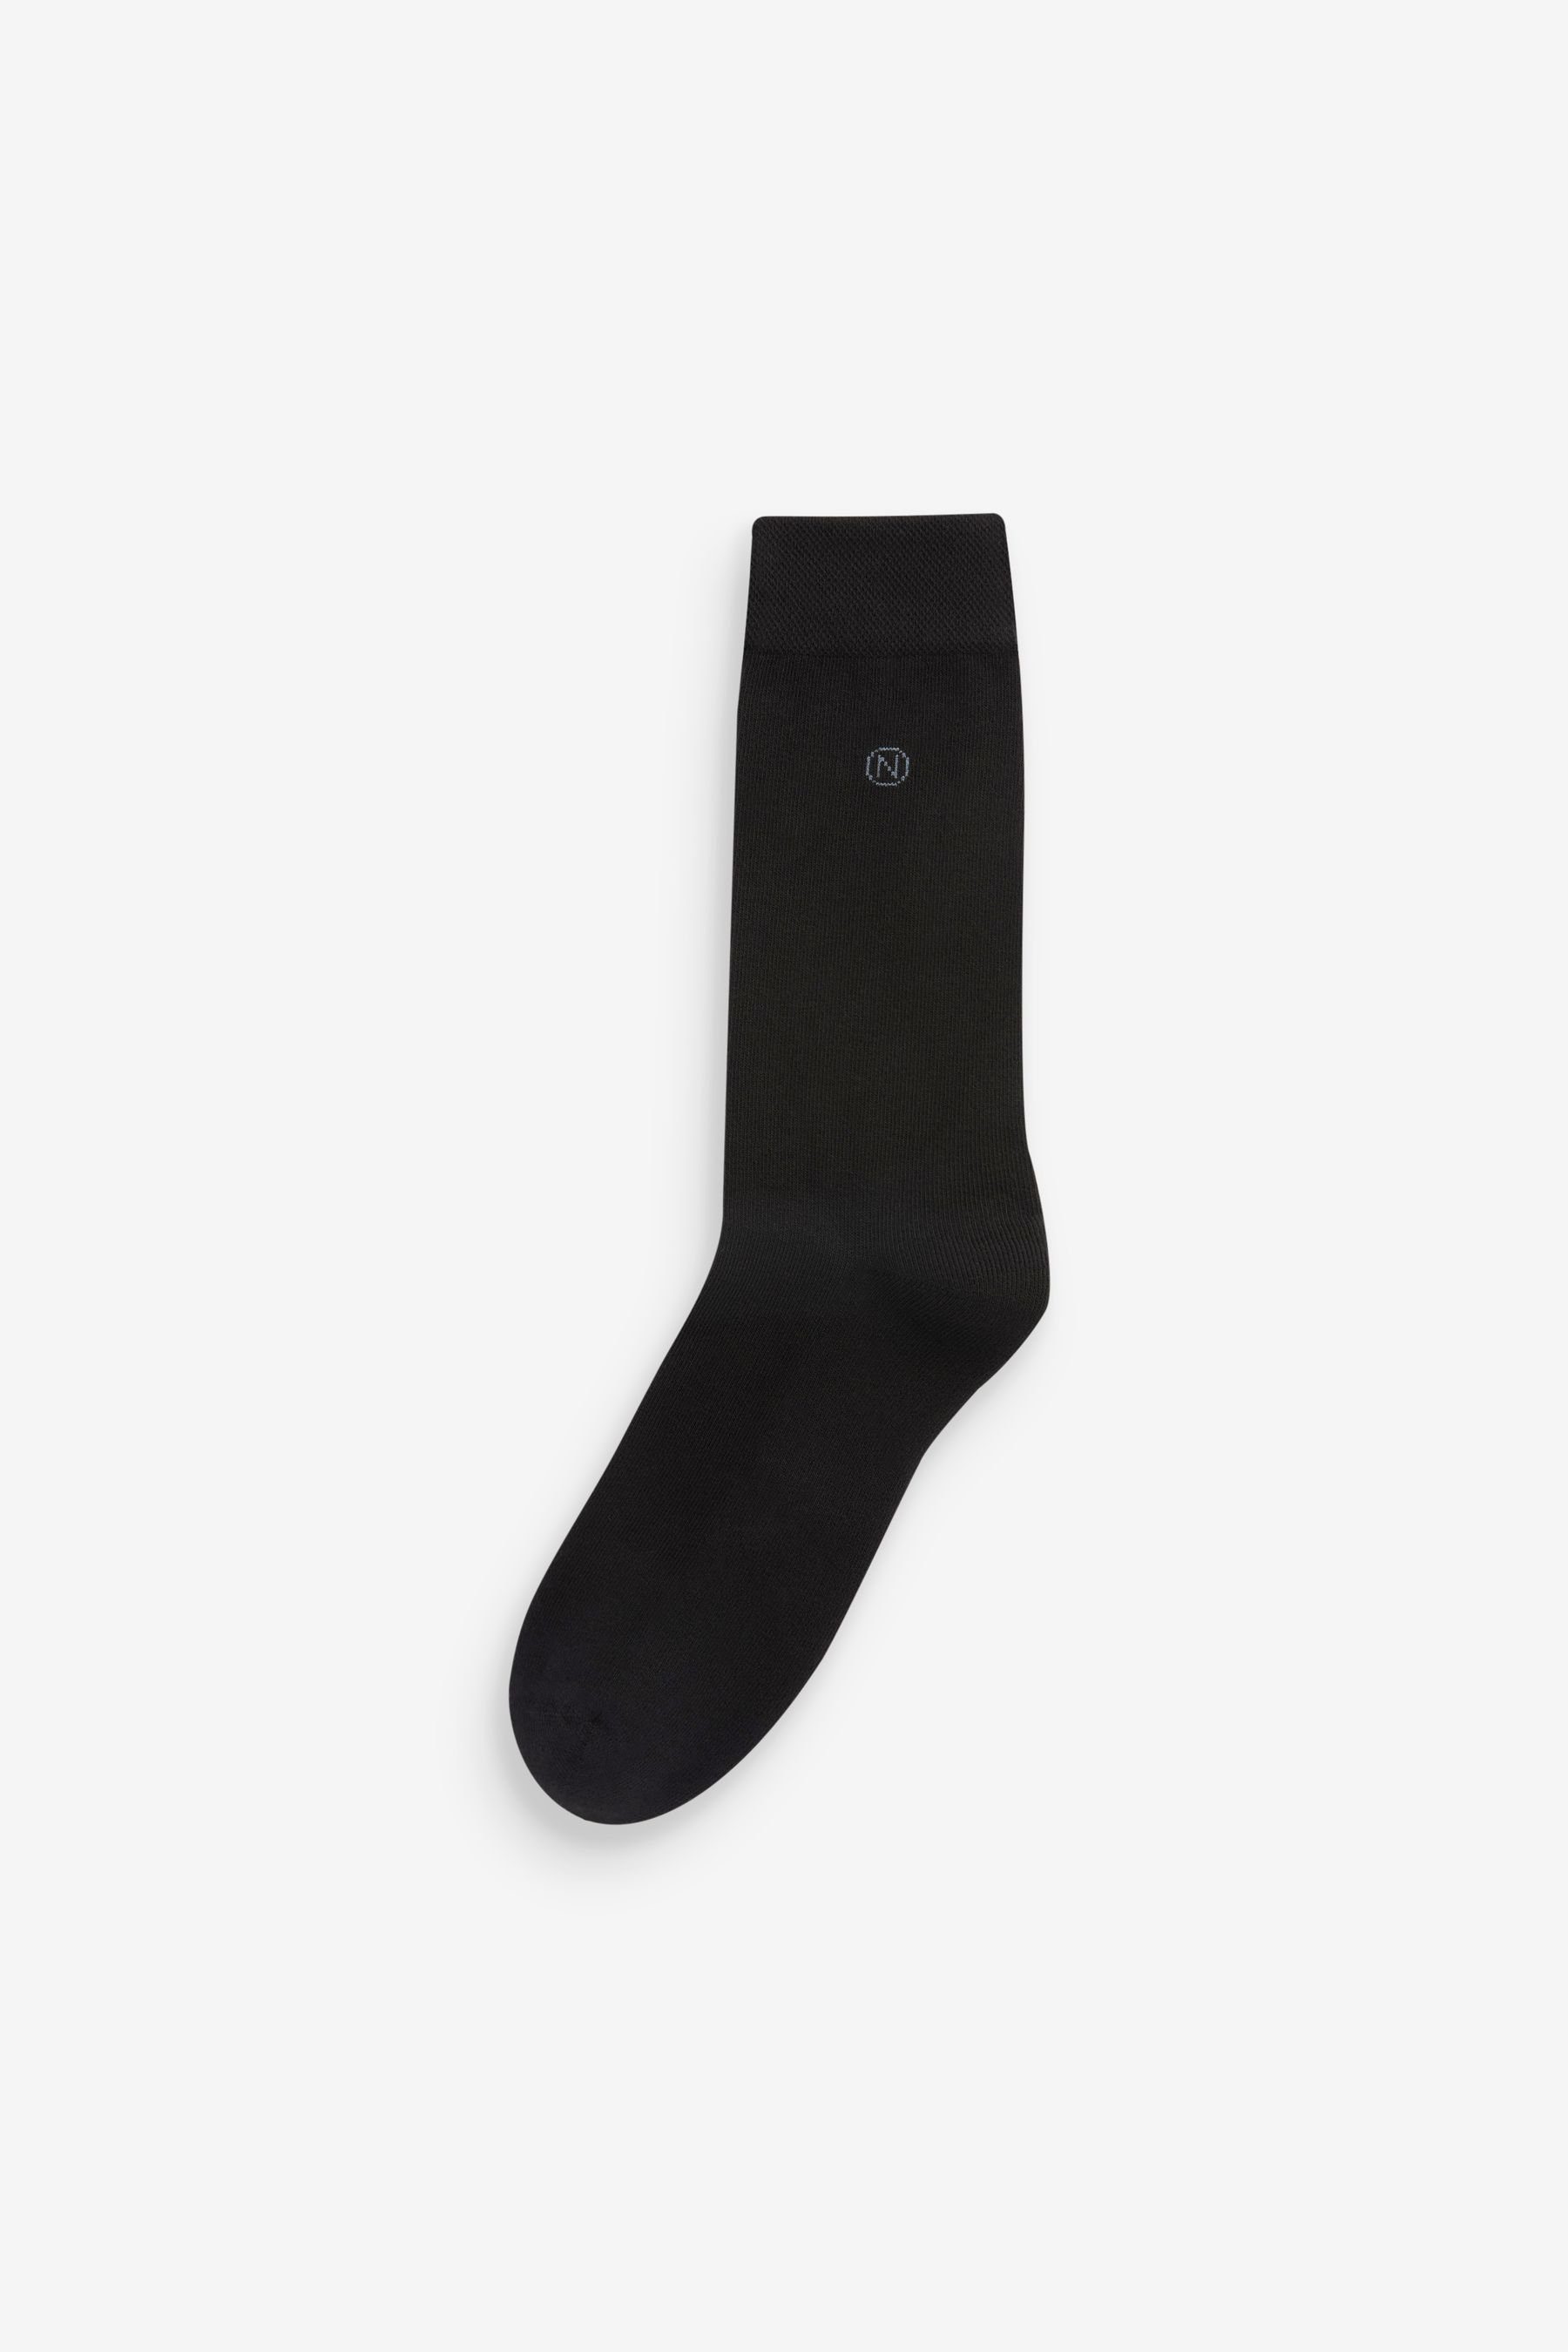 (10-Paar) Kurzsocken Socken Black gepolsterter Next 10er-Pack Sohle, mit